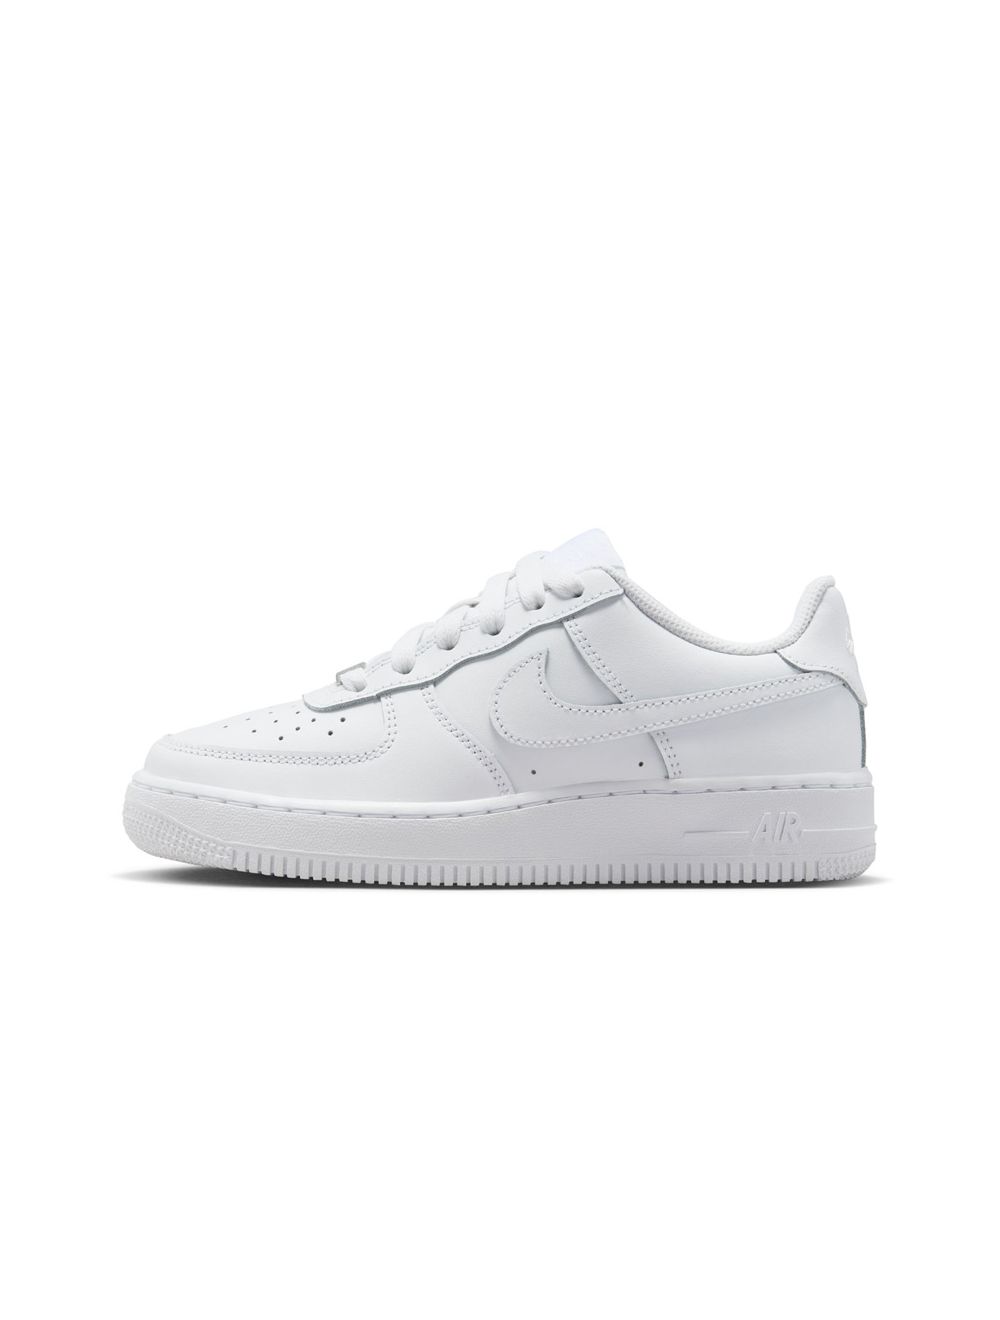 Shop Nike Air Force 1 LV8 2 Youth Shoes Mono White | Studio 88